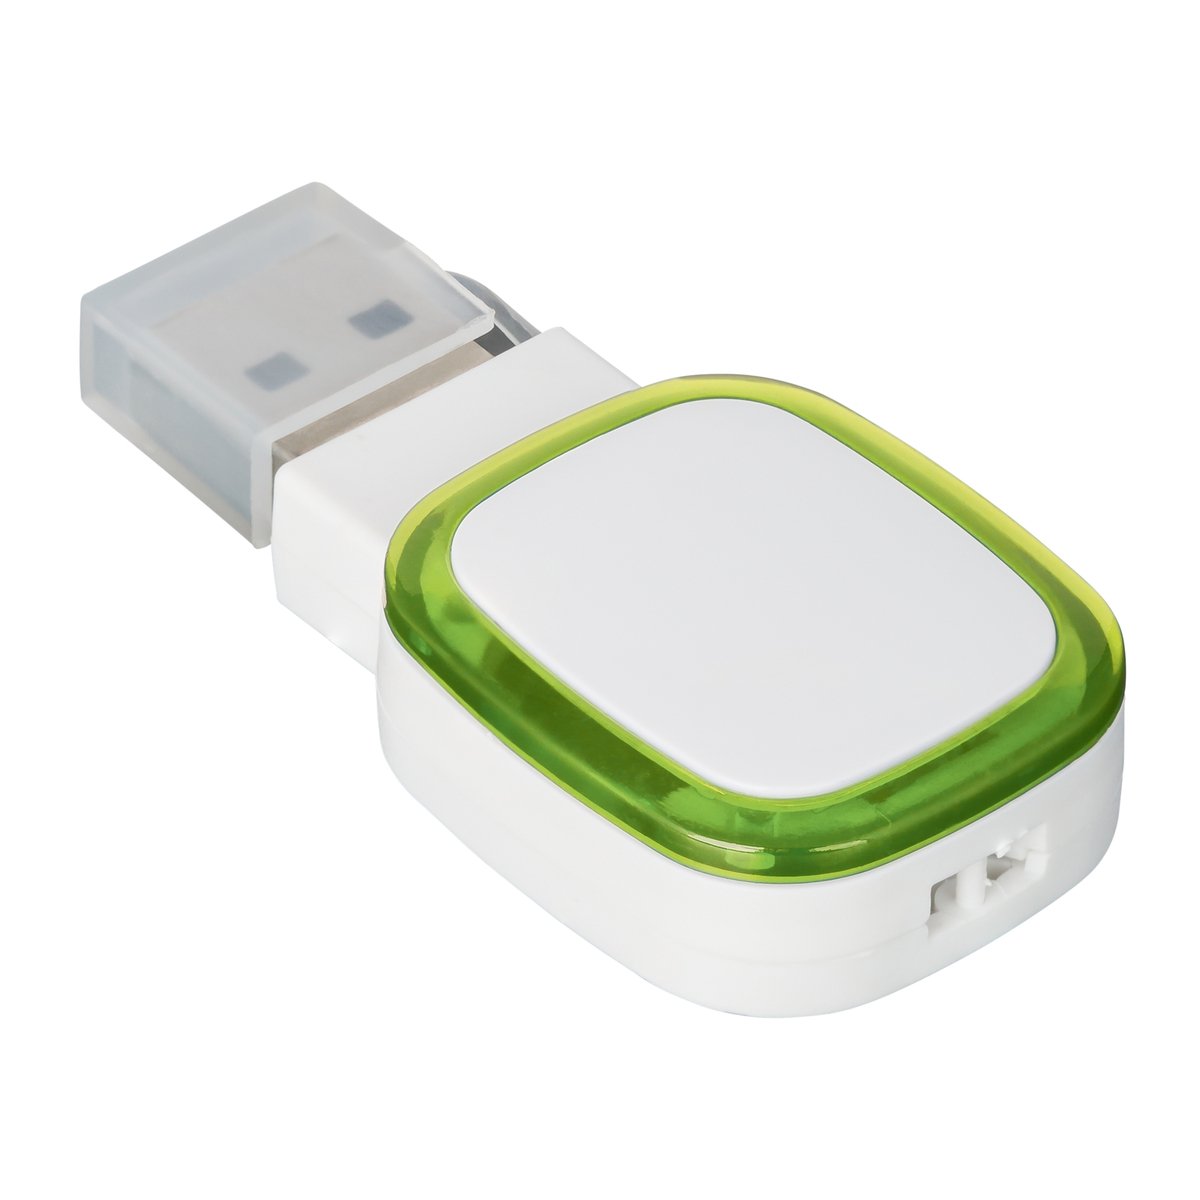 USB Flash Drive COLLECTION 500 light green 4GB